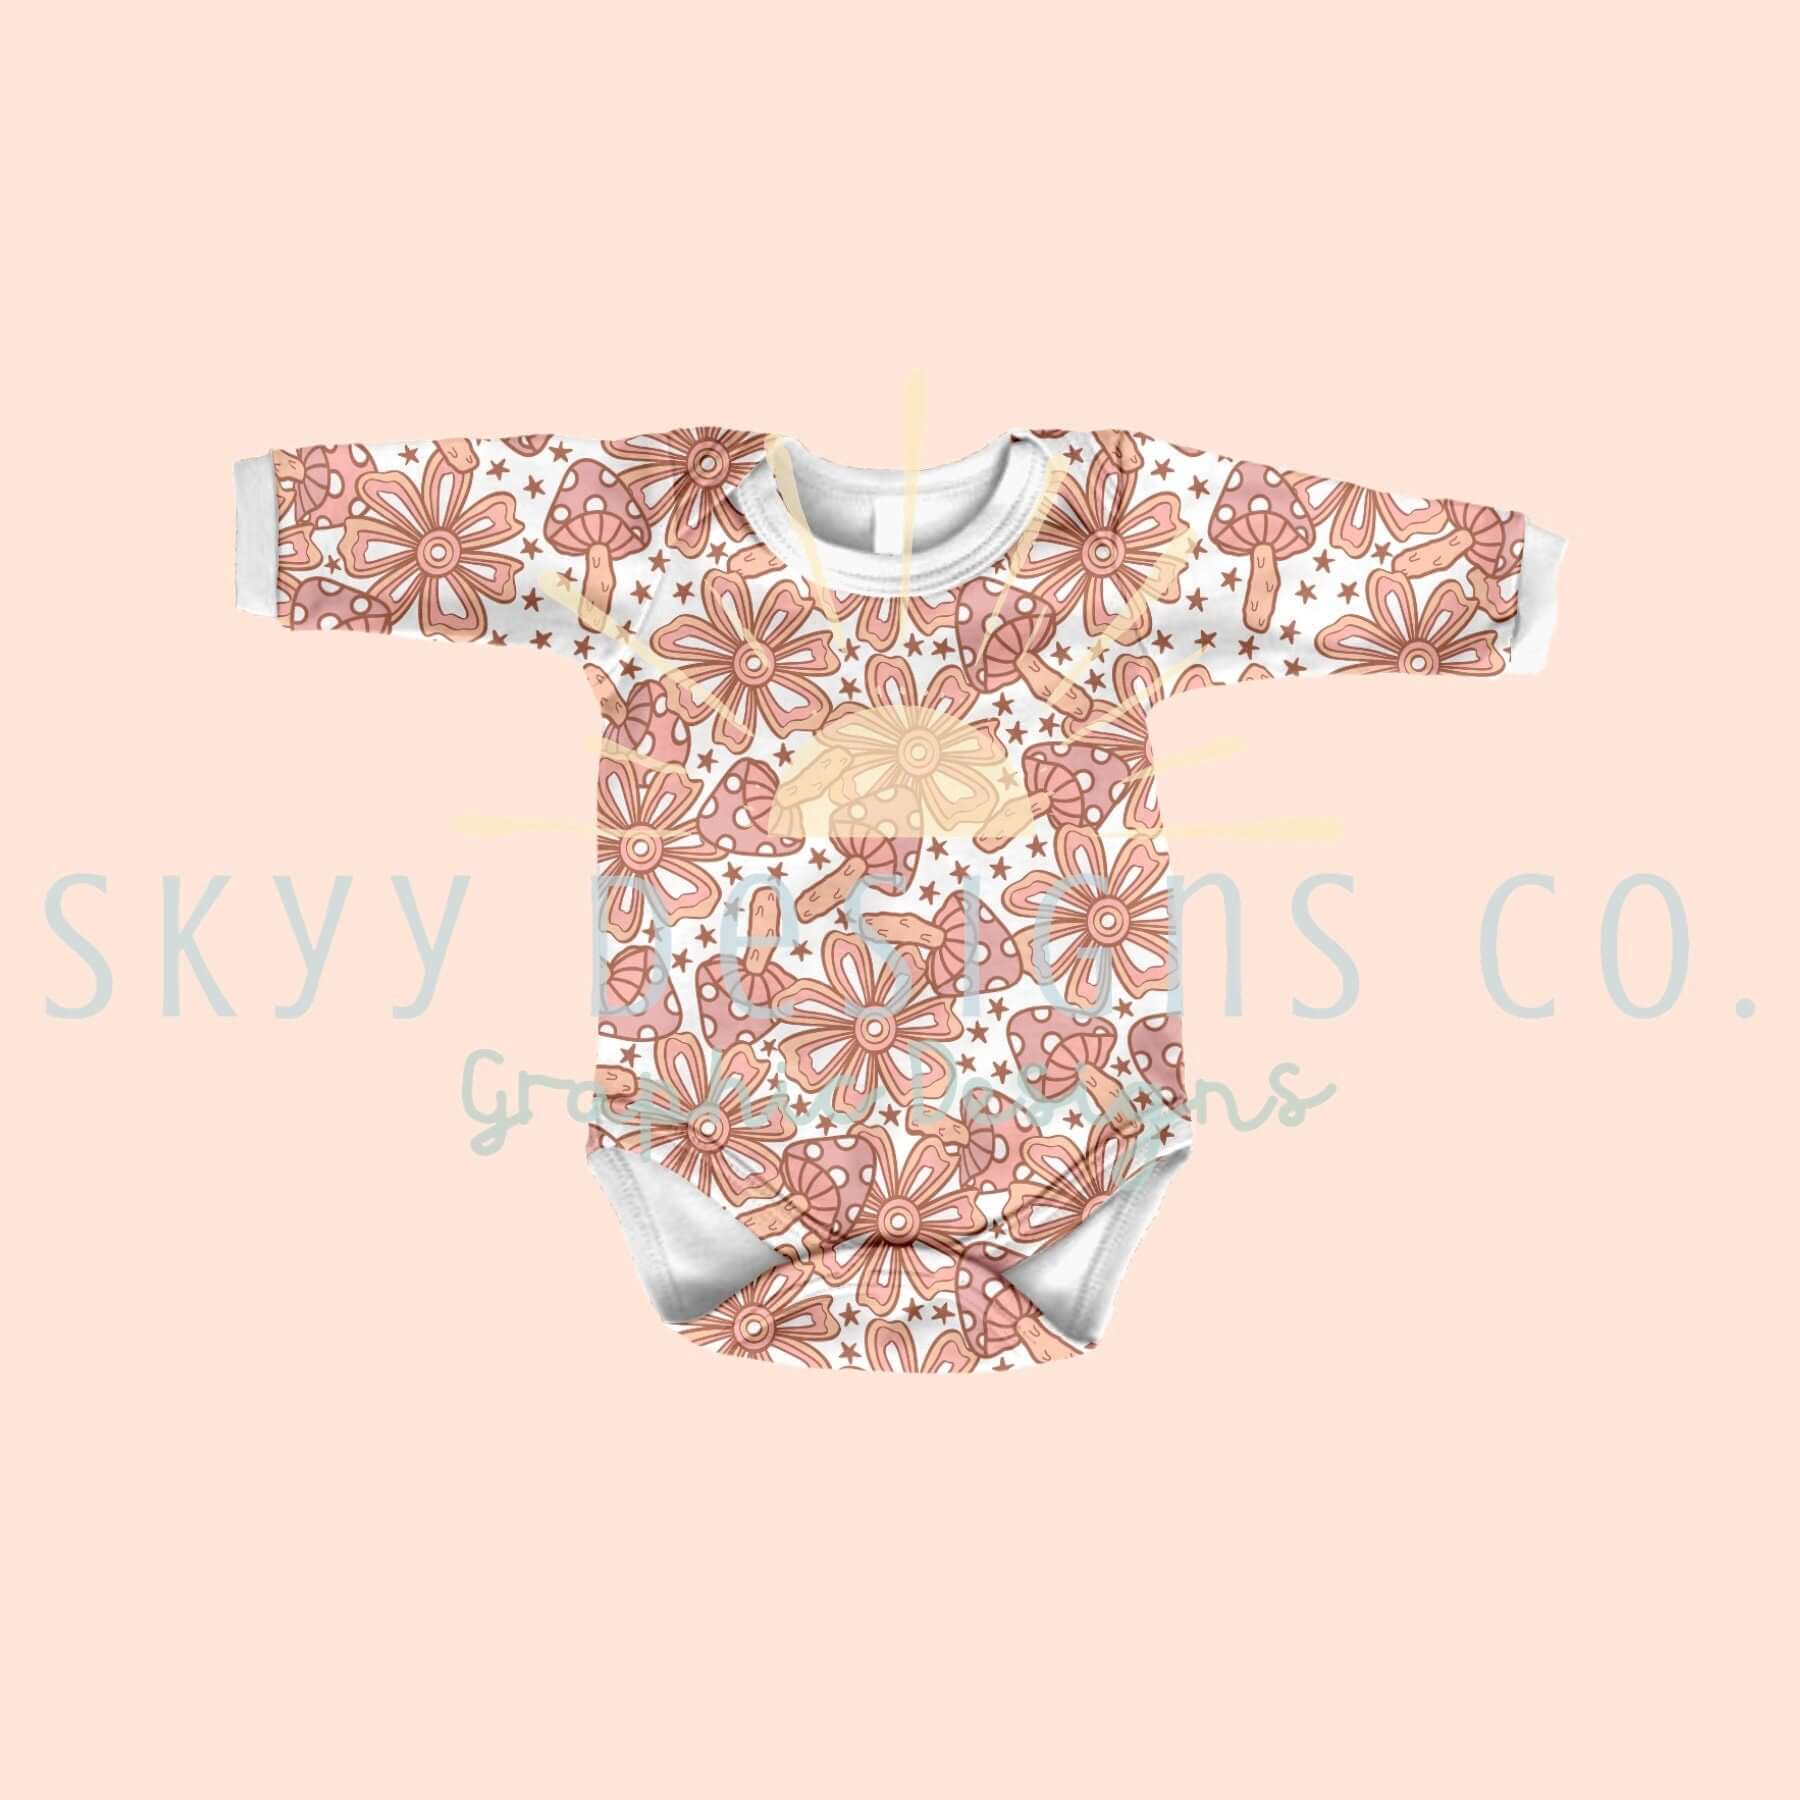 Baby onesie Mock-up template - SkyyDesignsCo